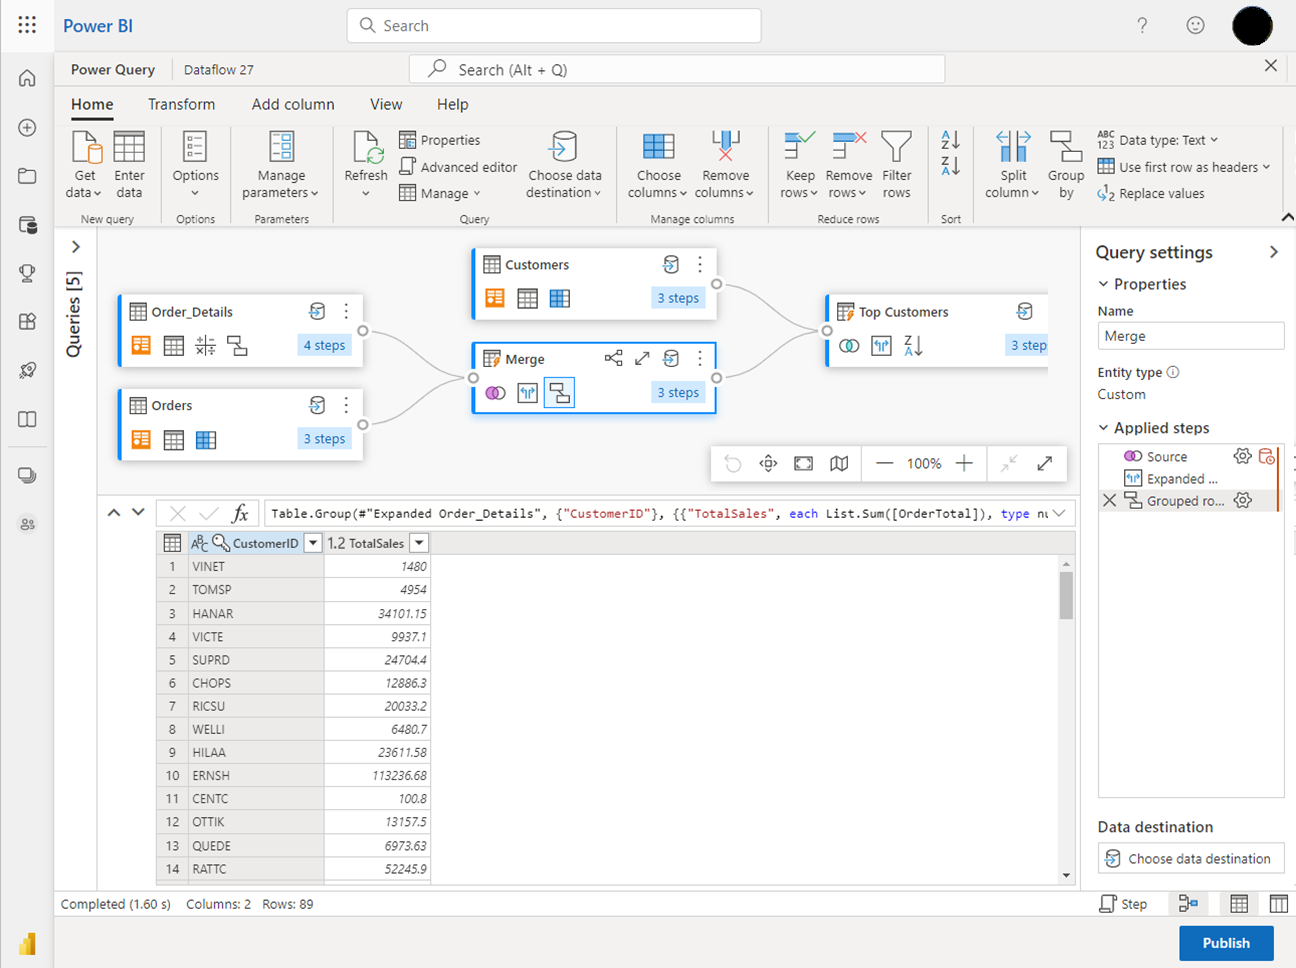 Screenshot of the Power BI user interface showing the dataflow experience.